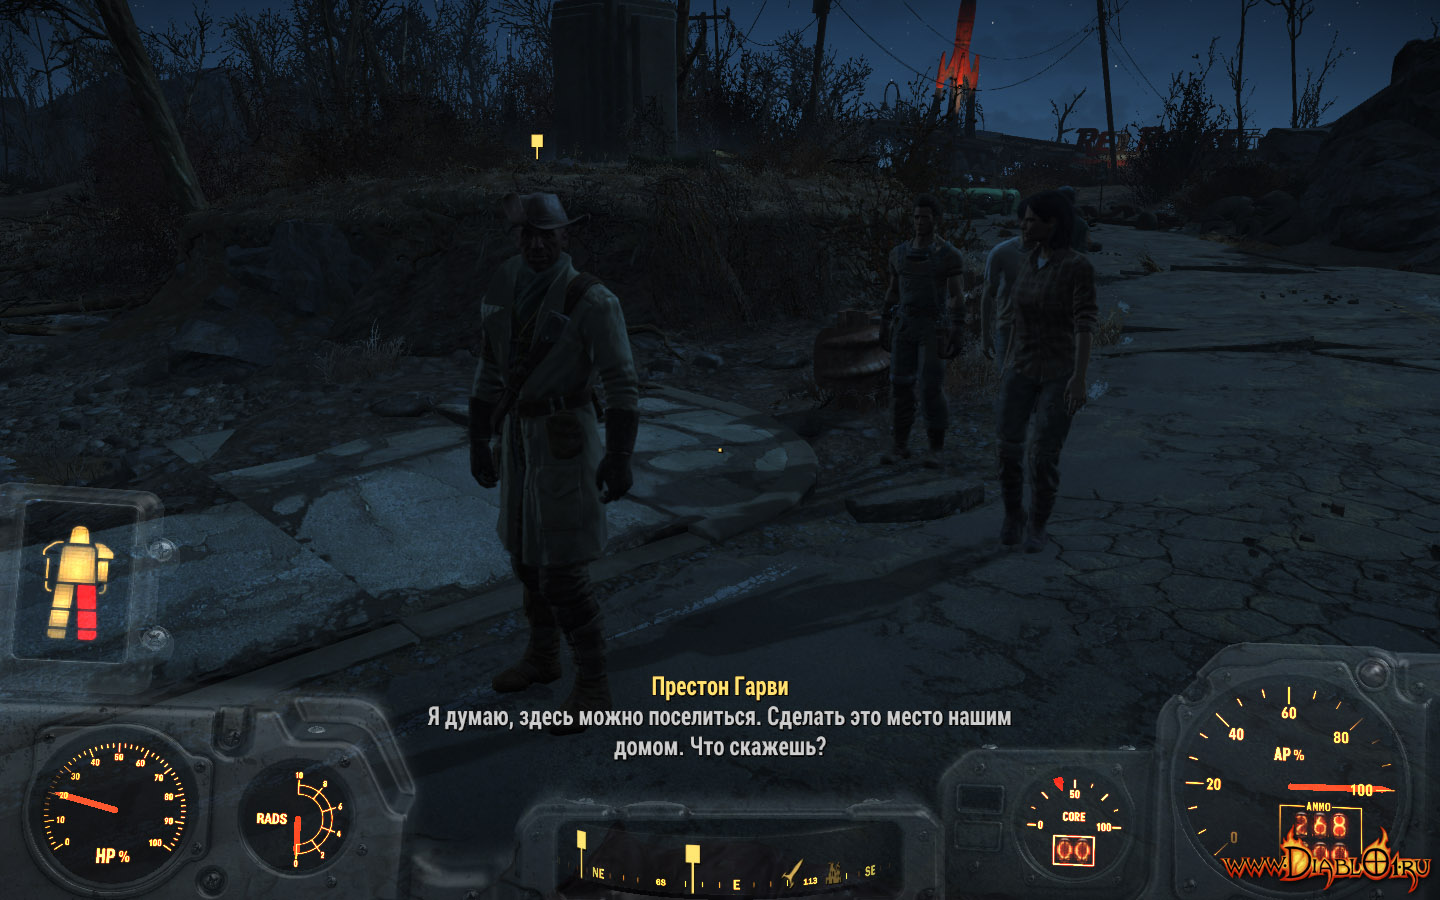 Fallout 4 ядер мир престон гарви фото 99